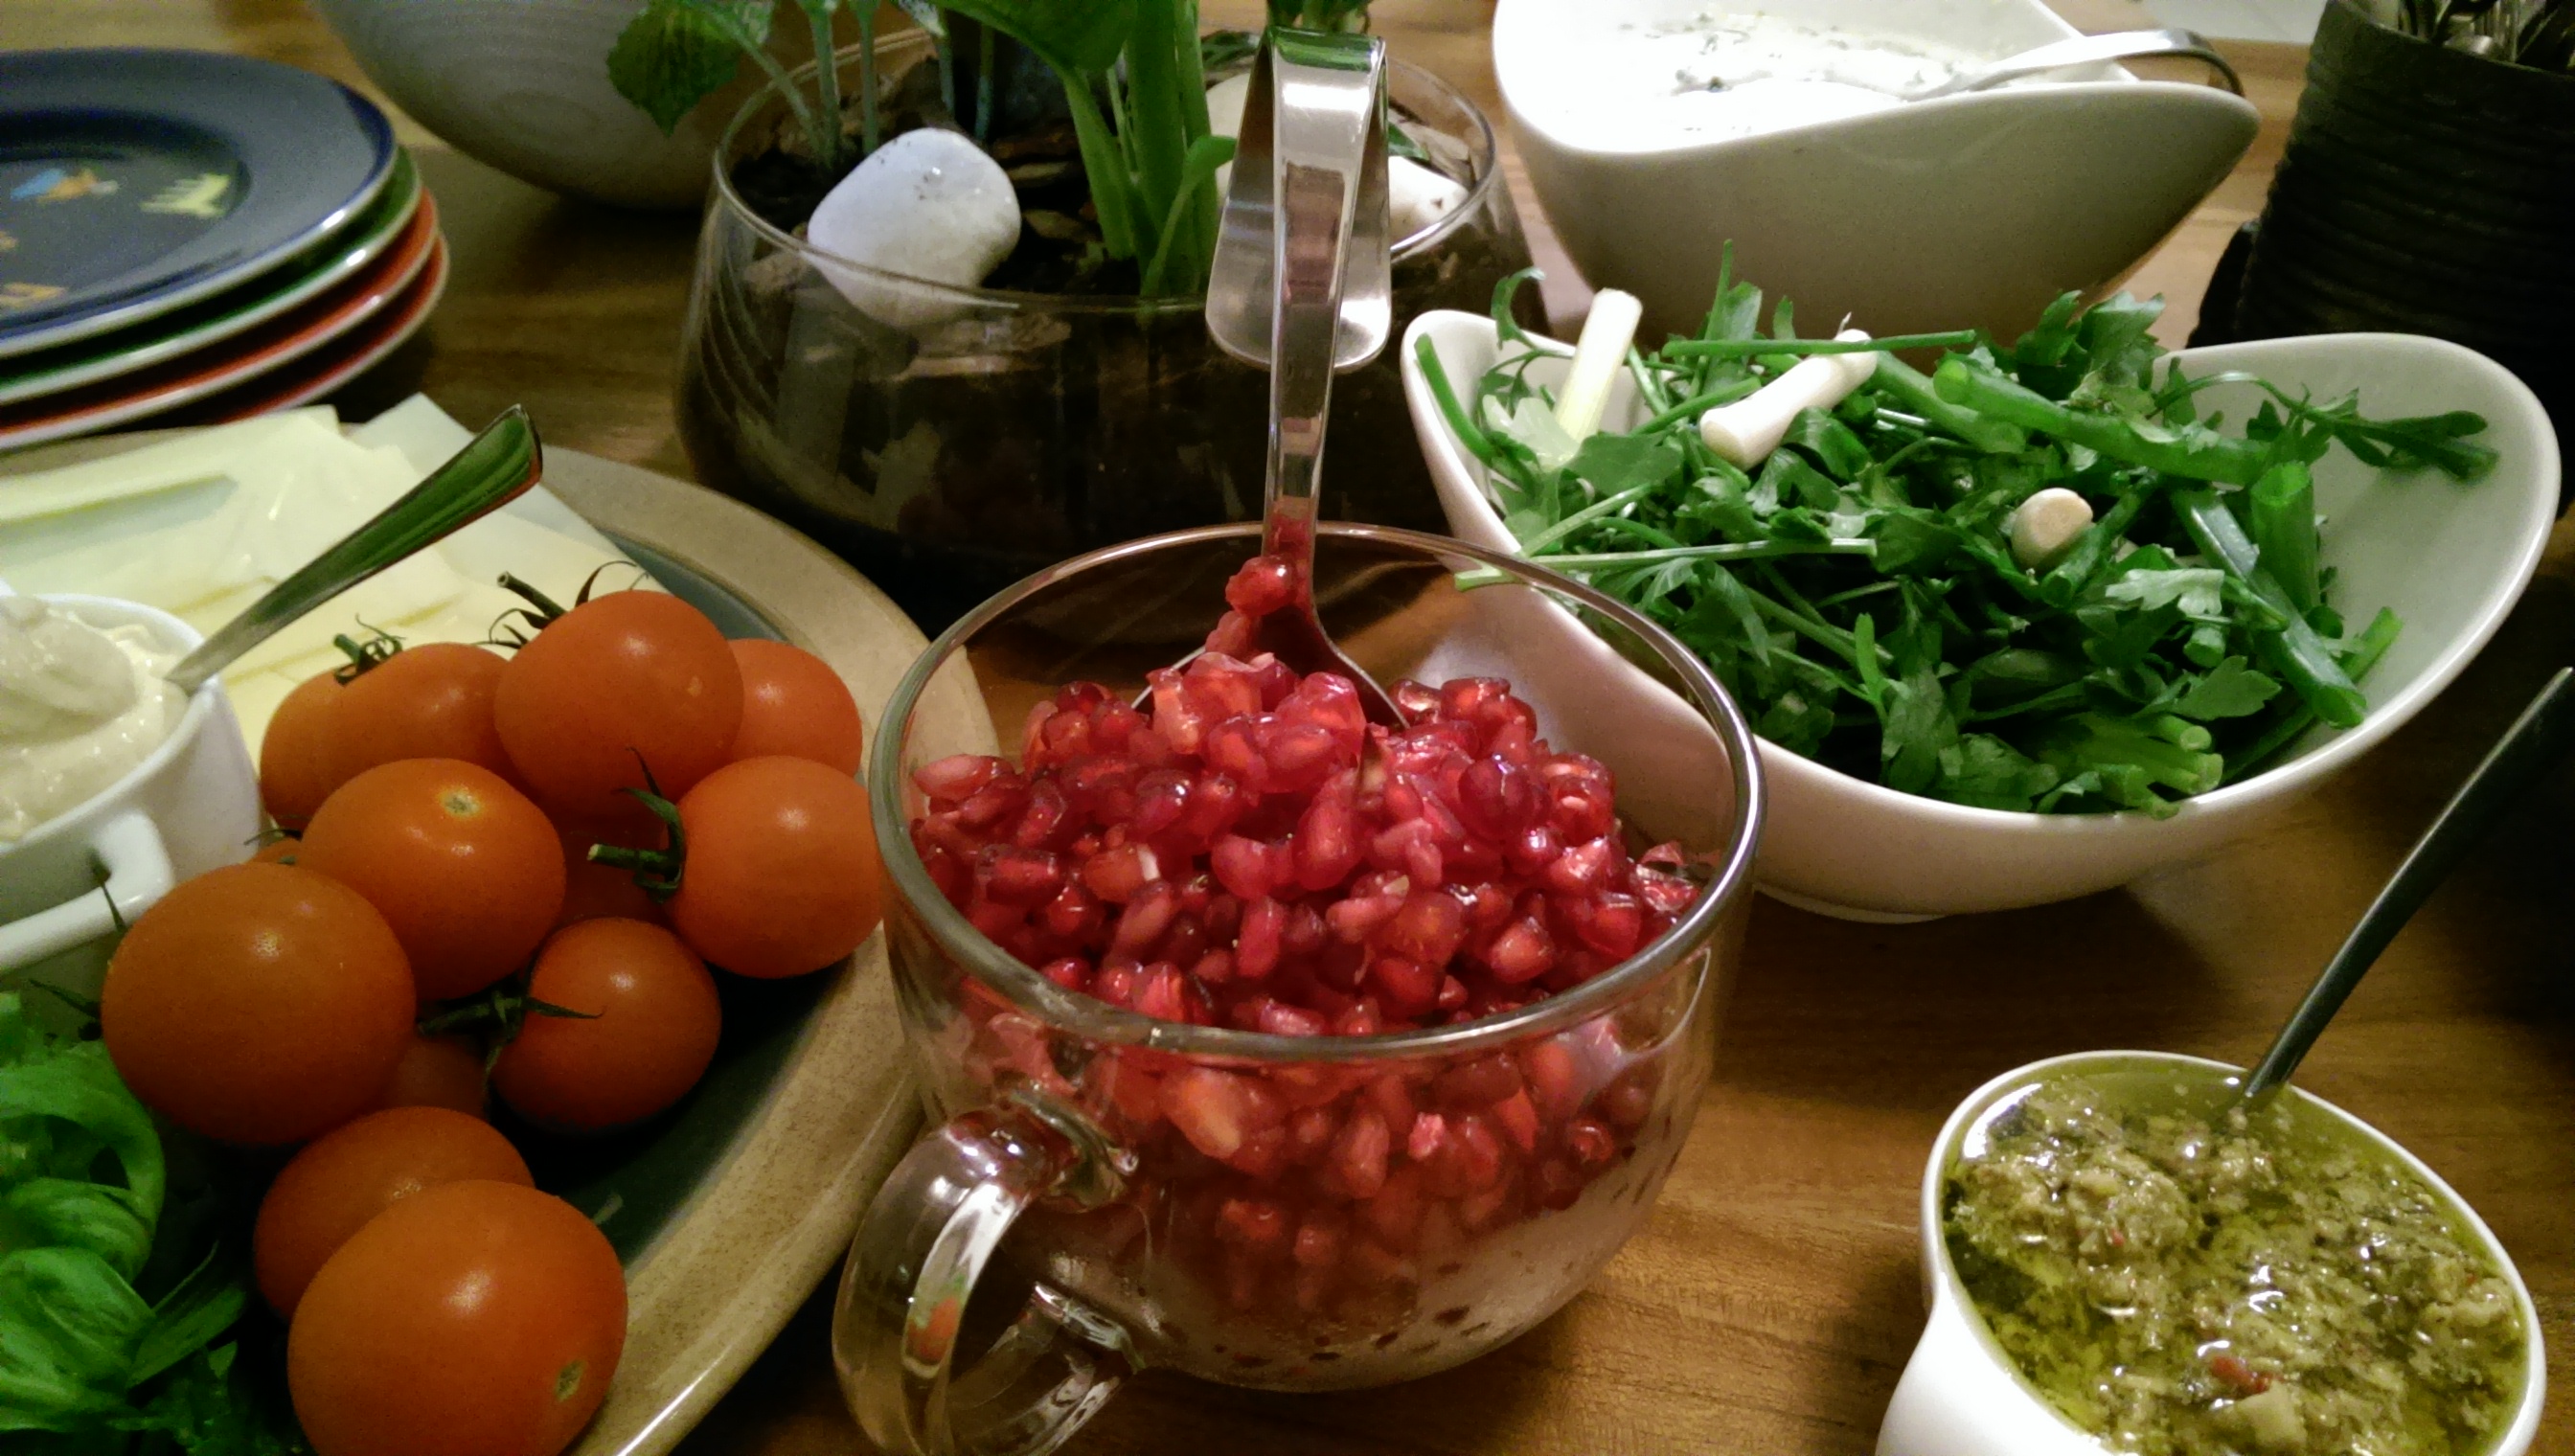 Pomegranate: This Juicy & Sweet/Sour Ruby Gemstone انار: این جواهر یاقوت کبود آبدار و ترش و شیرین